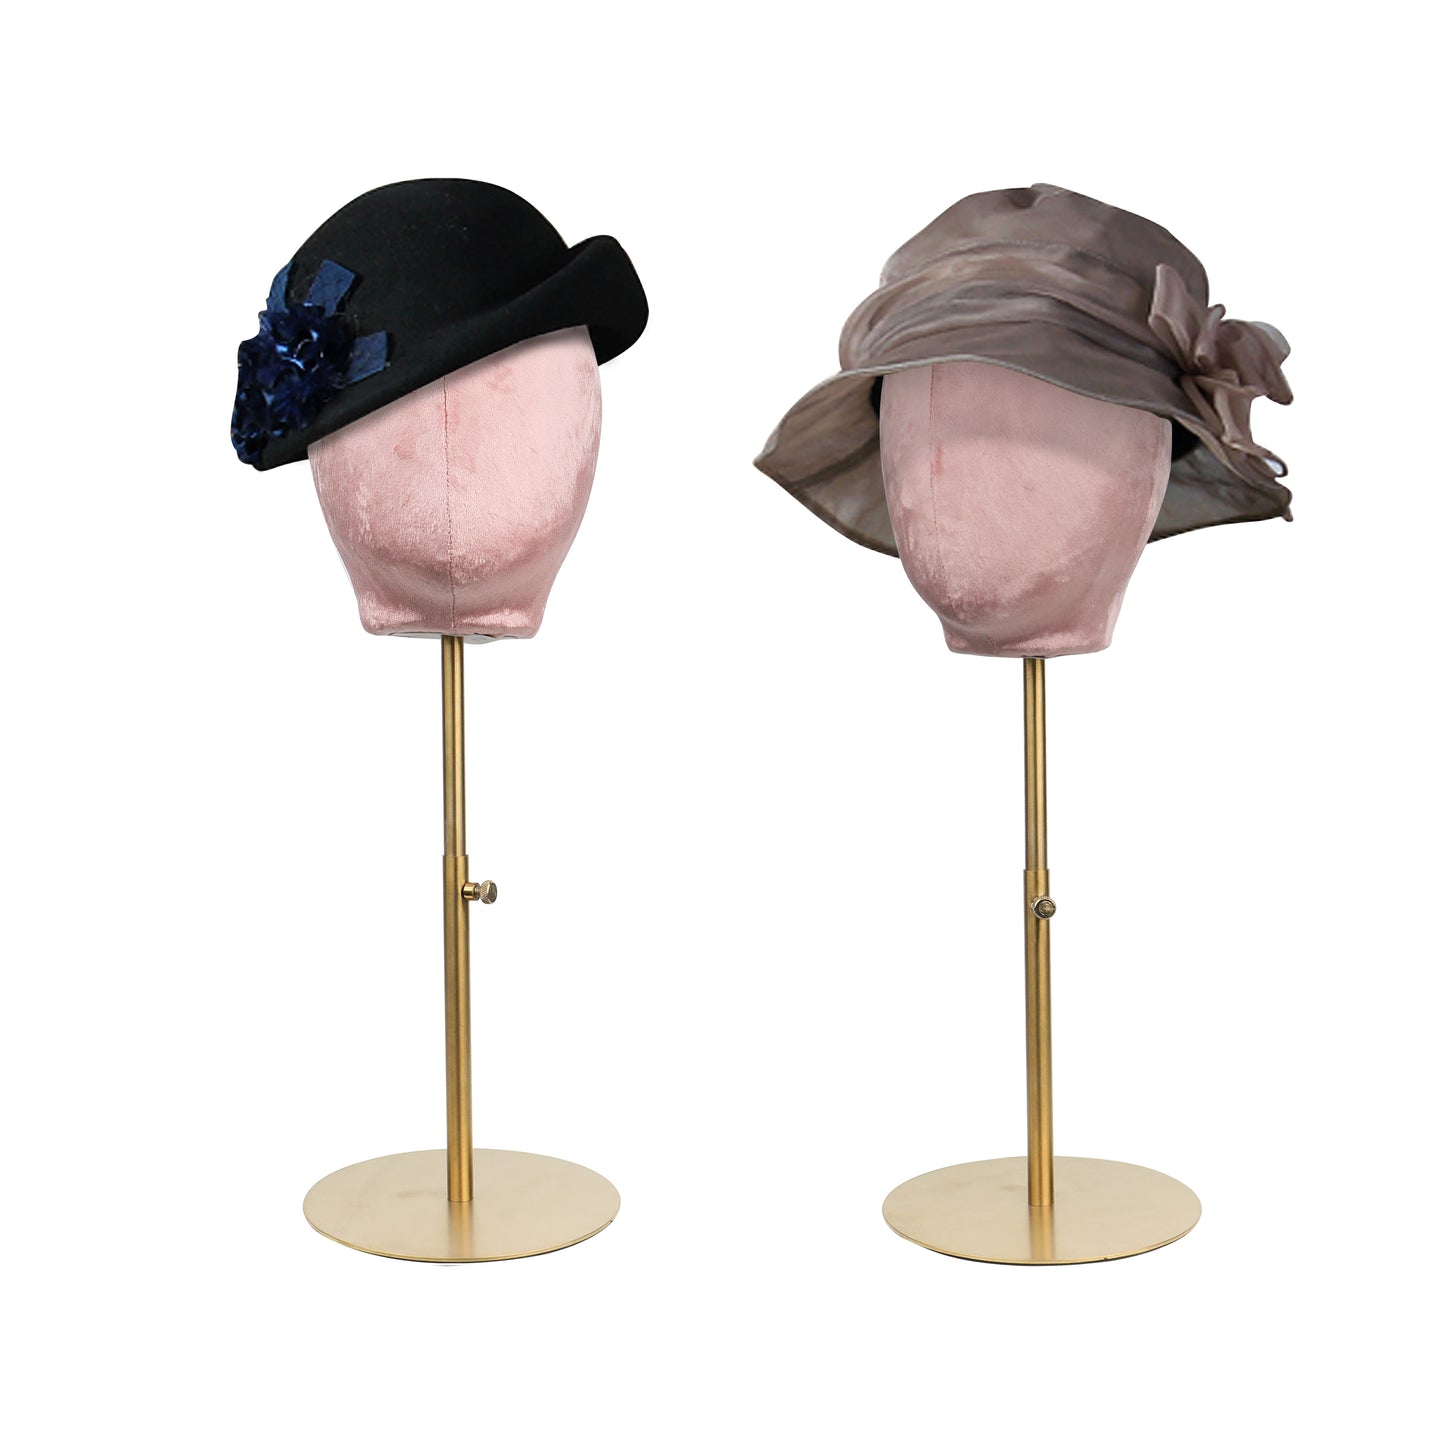 Jelimate Female Velvet Head Form Headband Jewelry Wedding Ornament Hair Sunglasses Hat Mask Cap Wig Display Head Mannequin Head